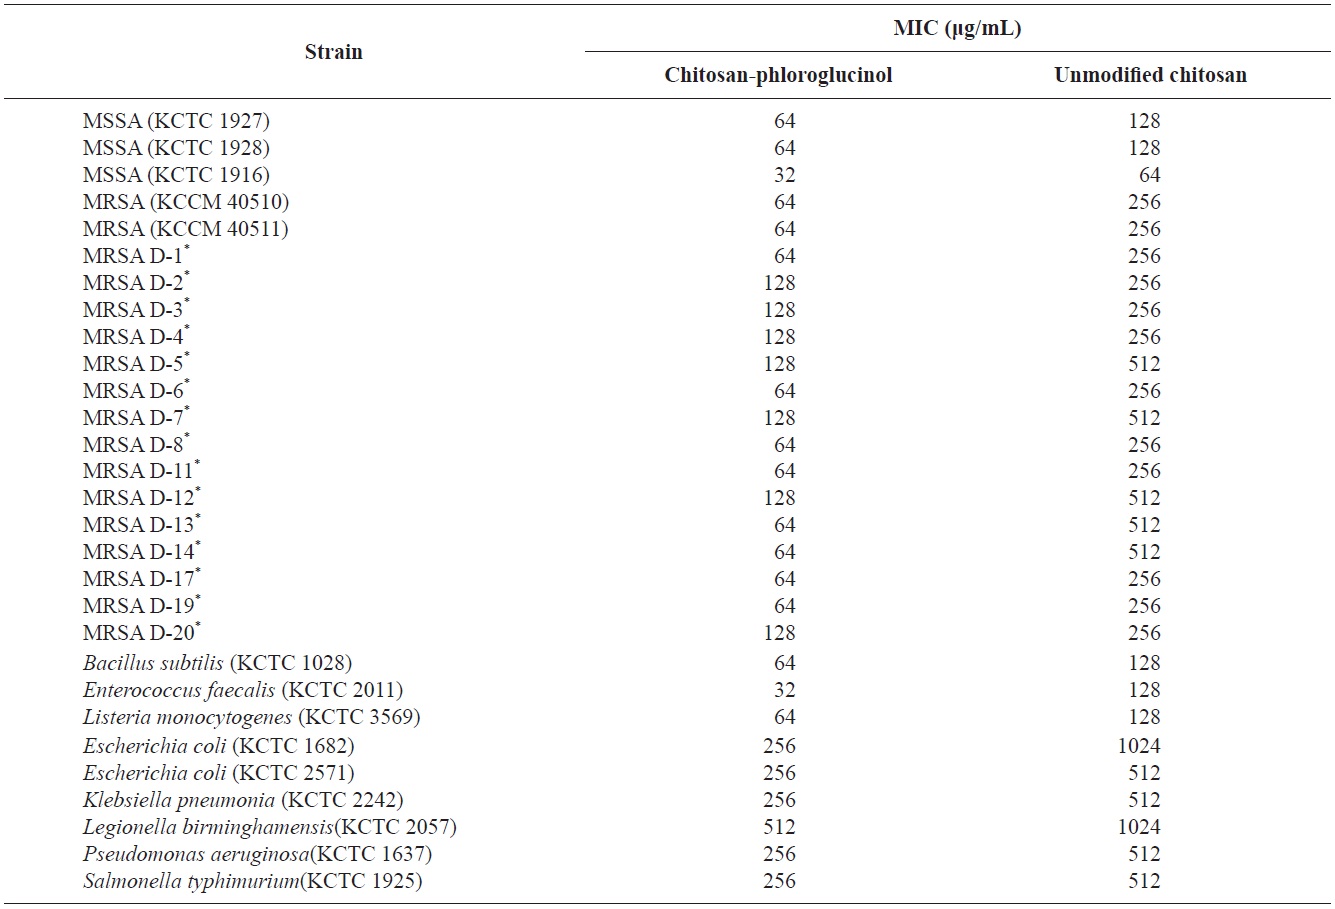 Minimum inhibitory concentrations (MICs) of chitosan-phloroglucinol and unmodified chitosan